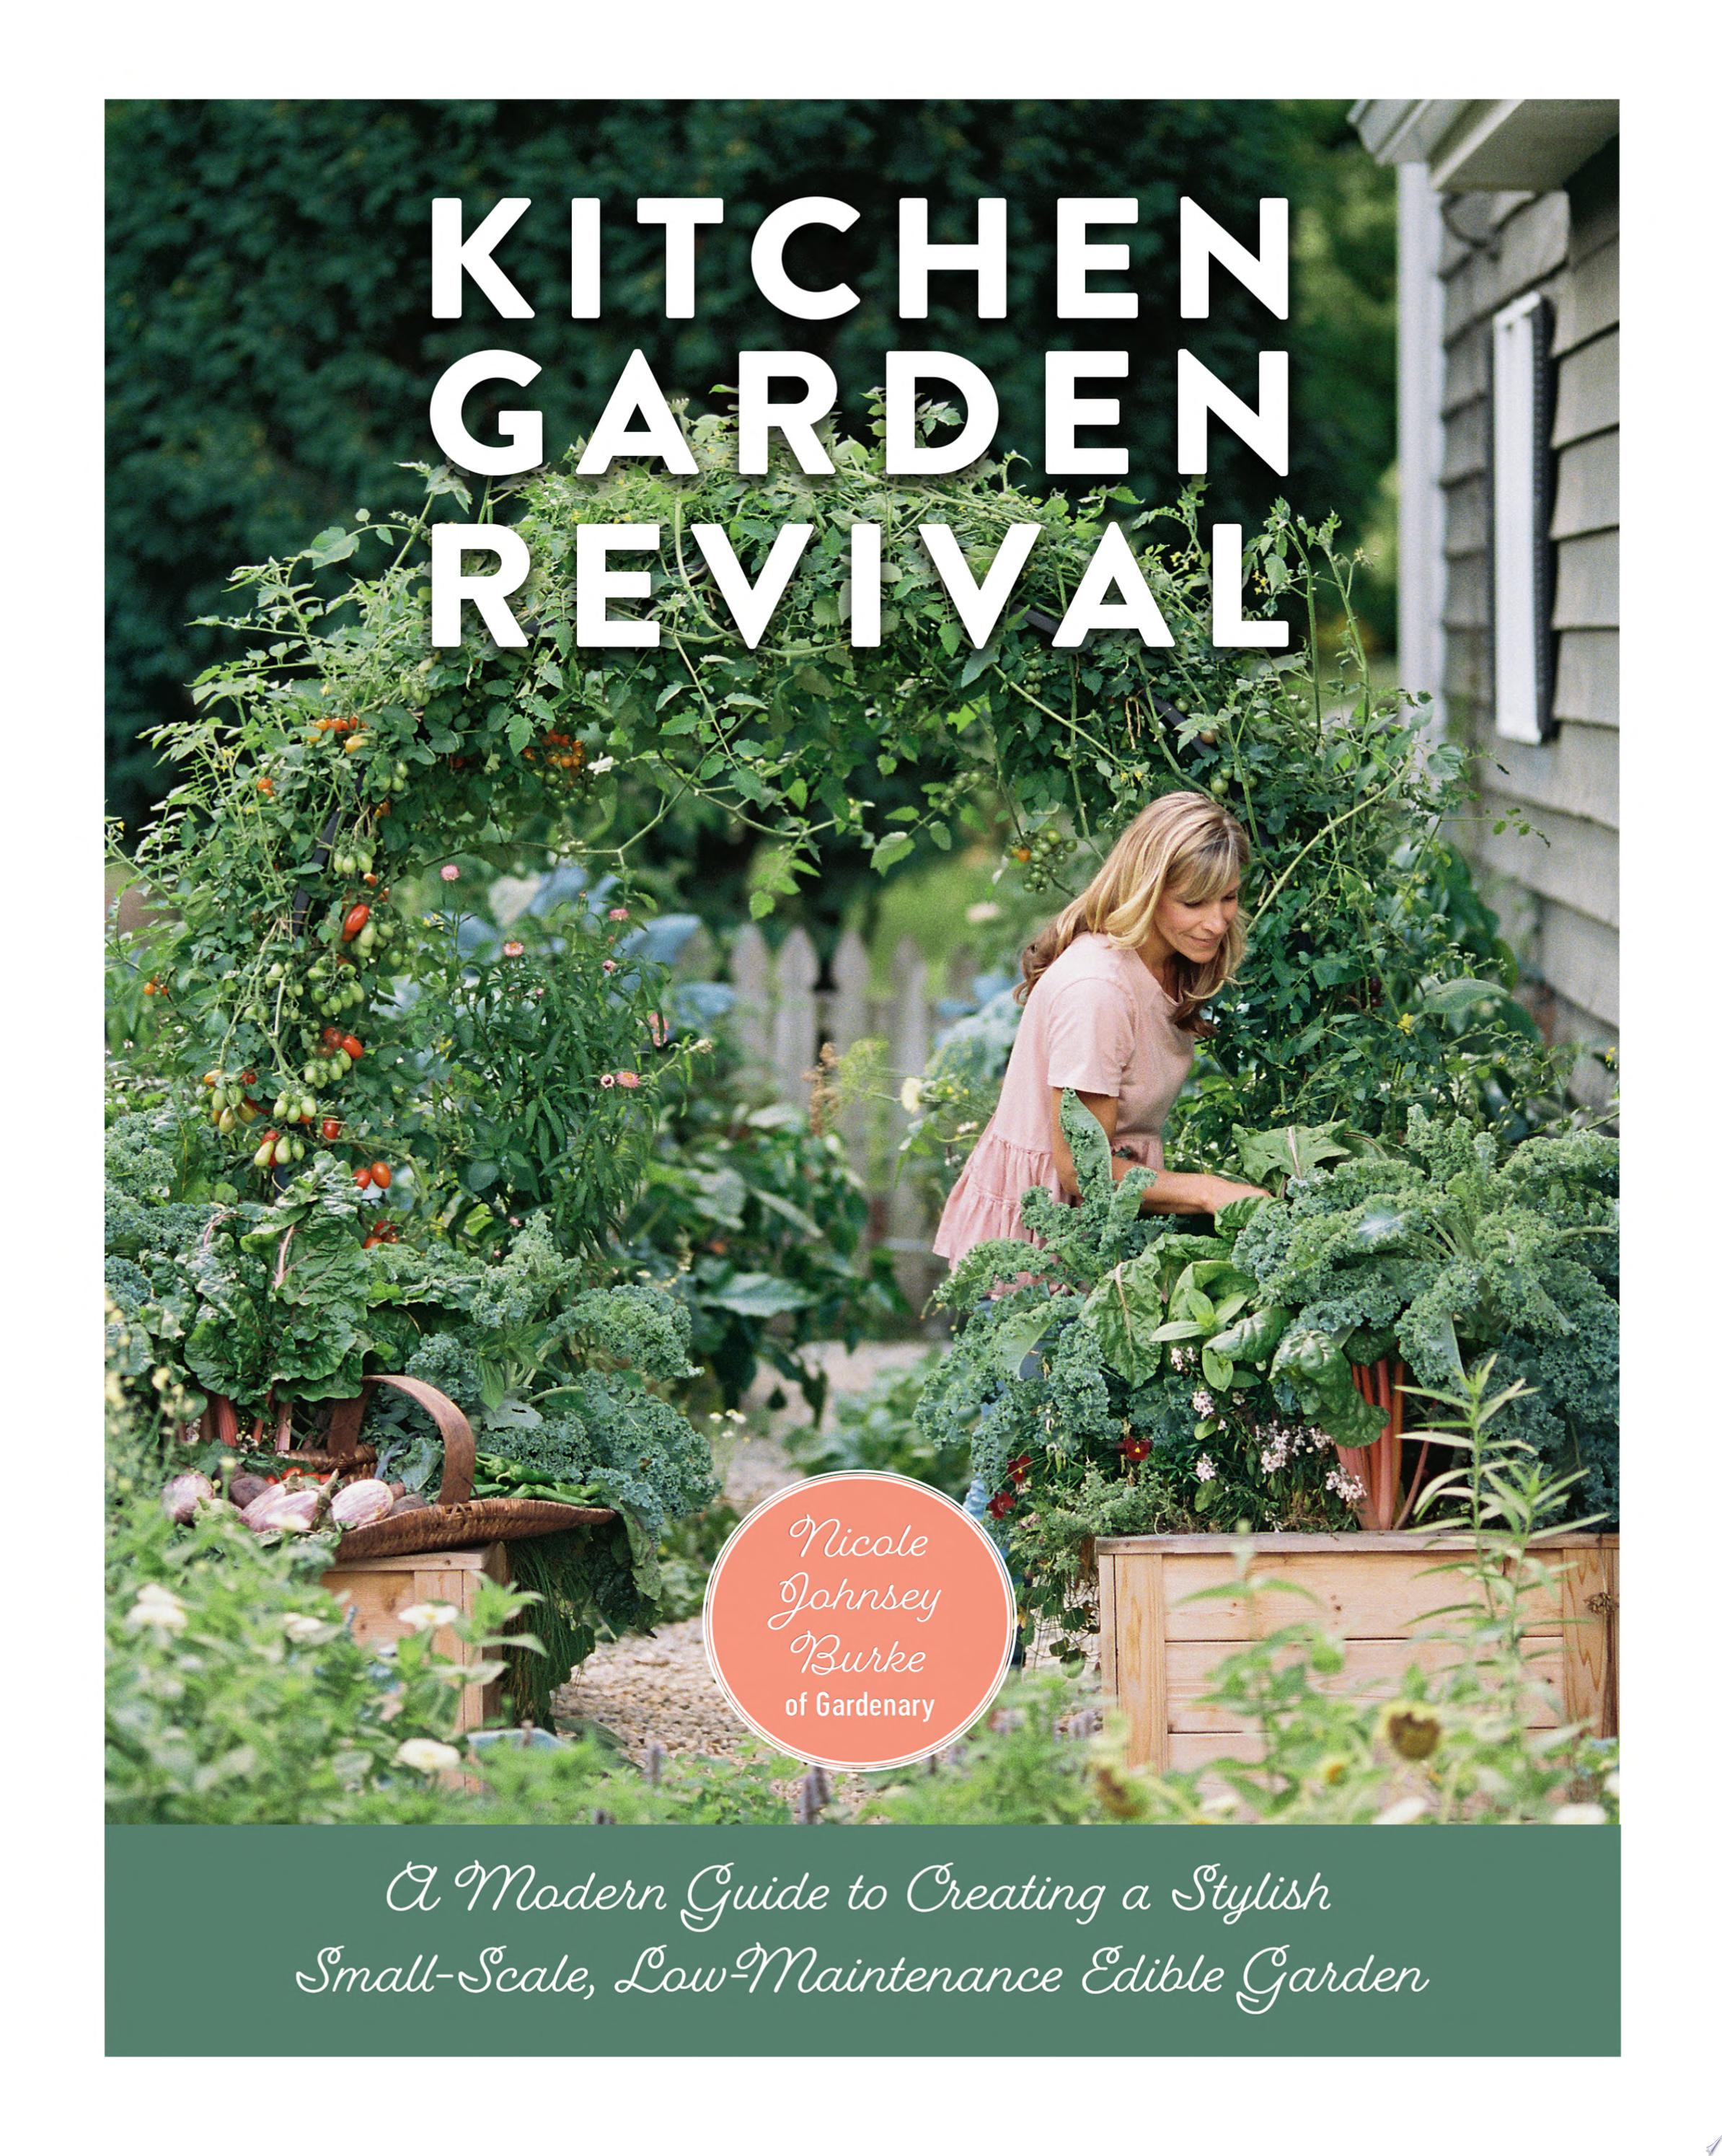 Image for "Kitchen Garden Revival"